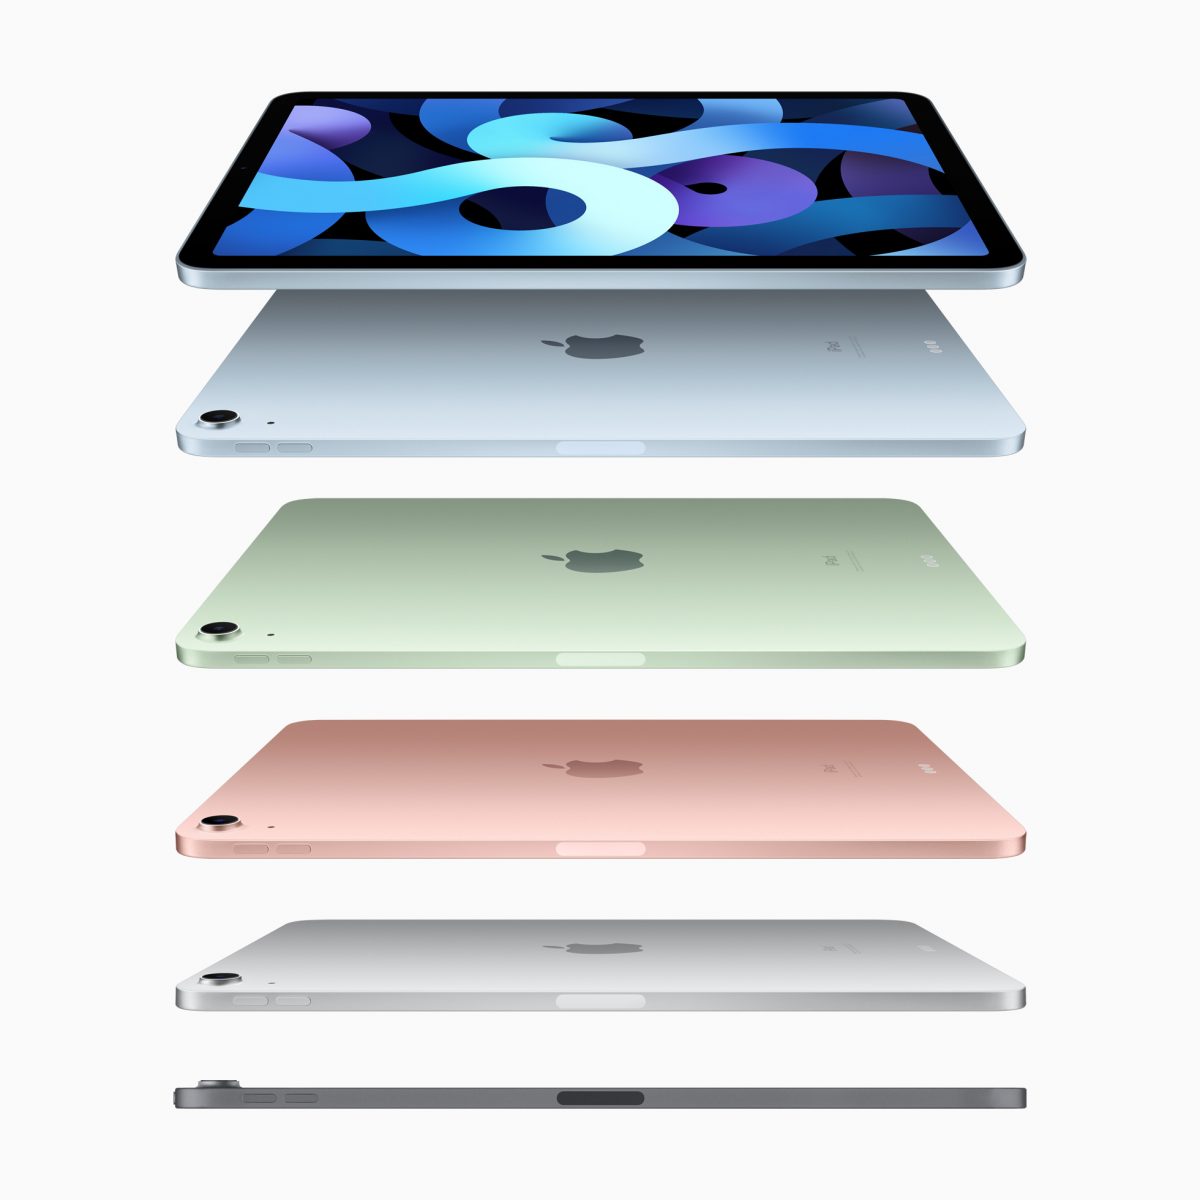 iPad Pro iPad mini iPad Air 選擇